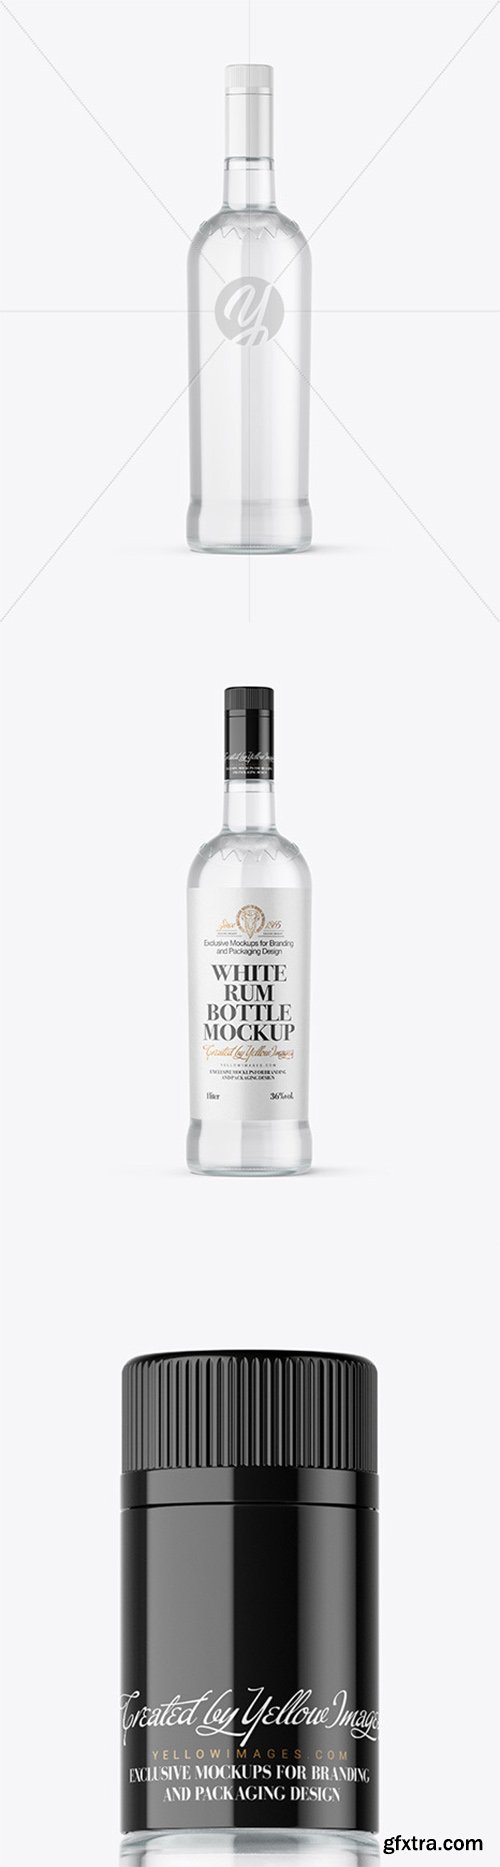 Clear Glass White Rum Bottle Mockup 61483